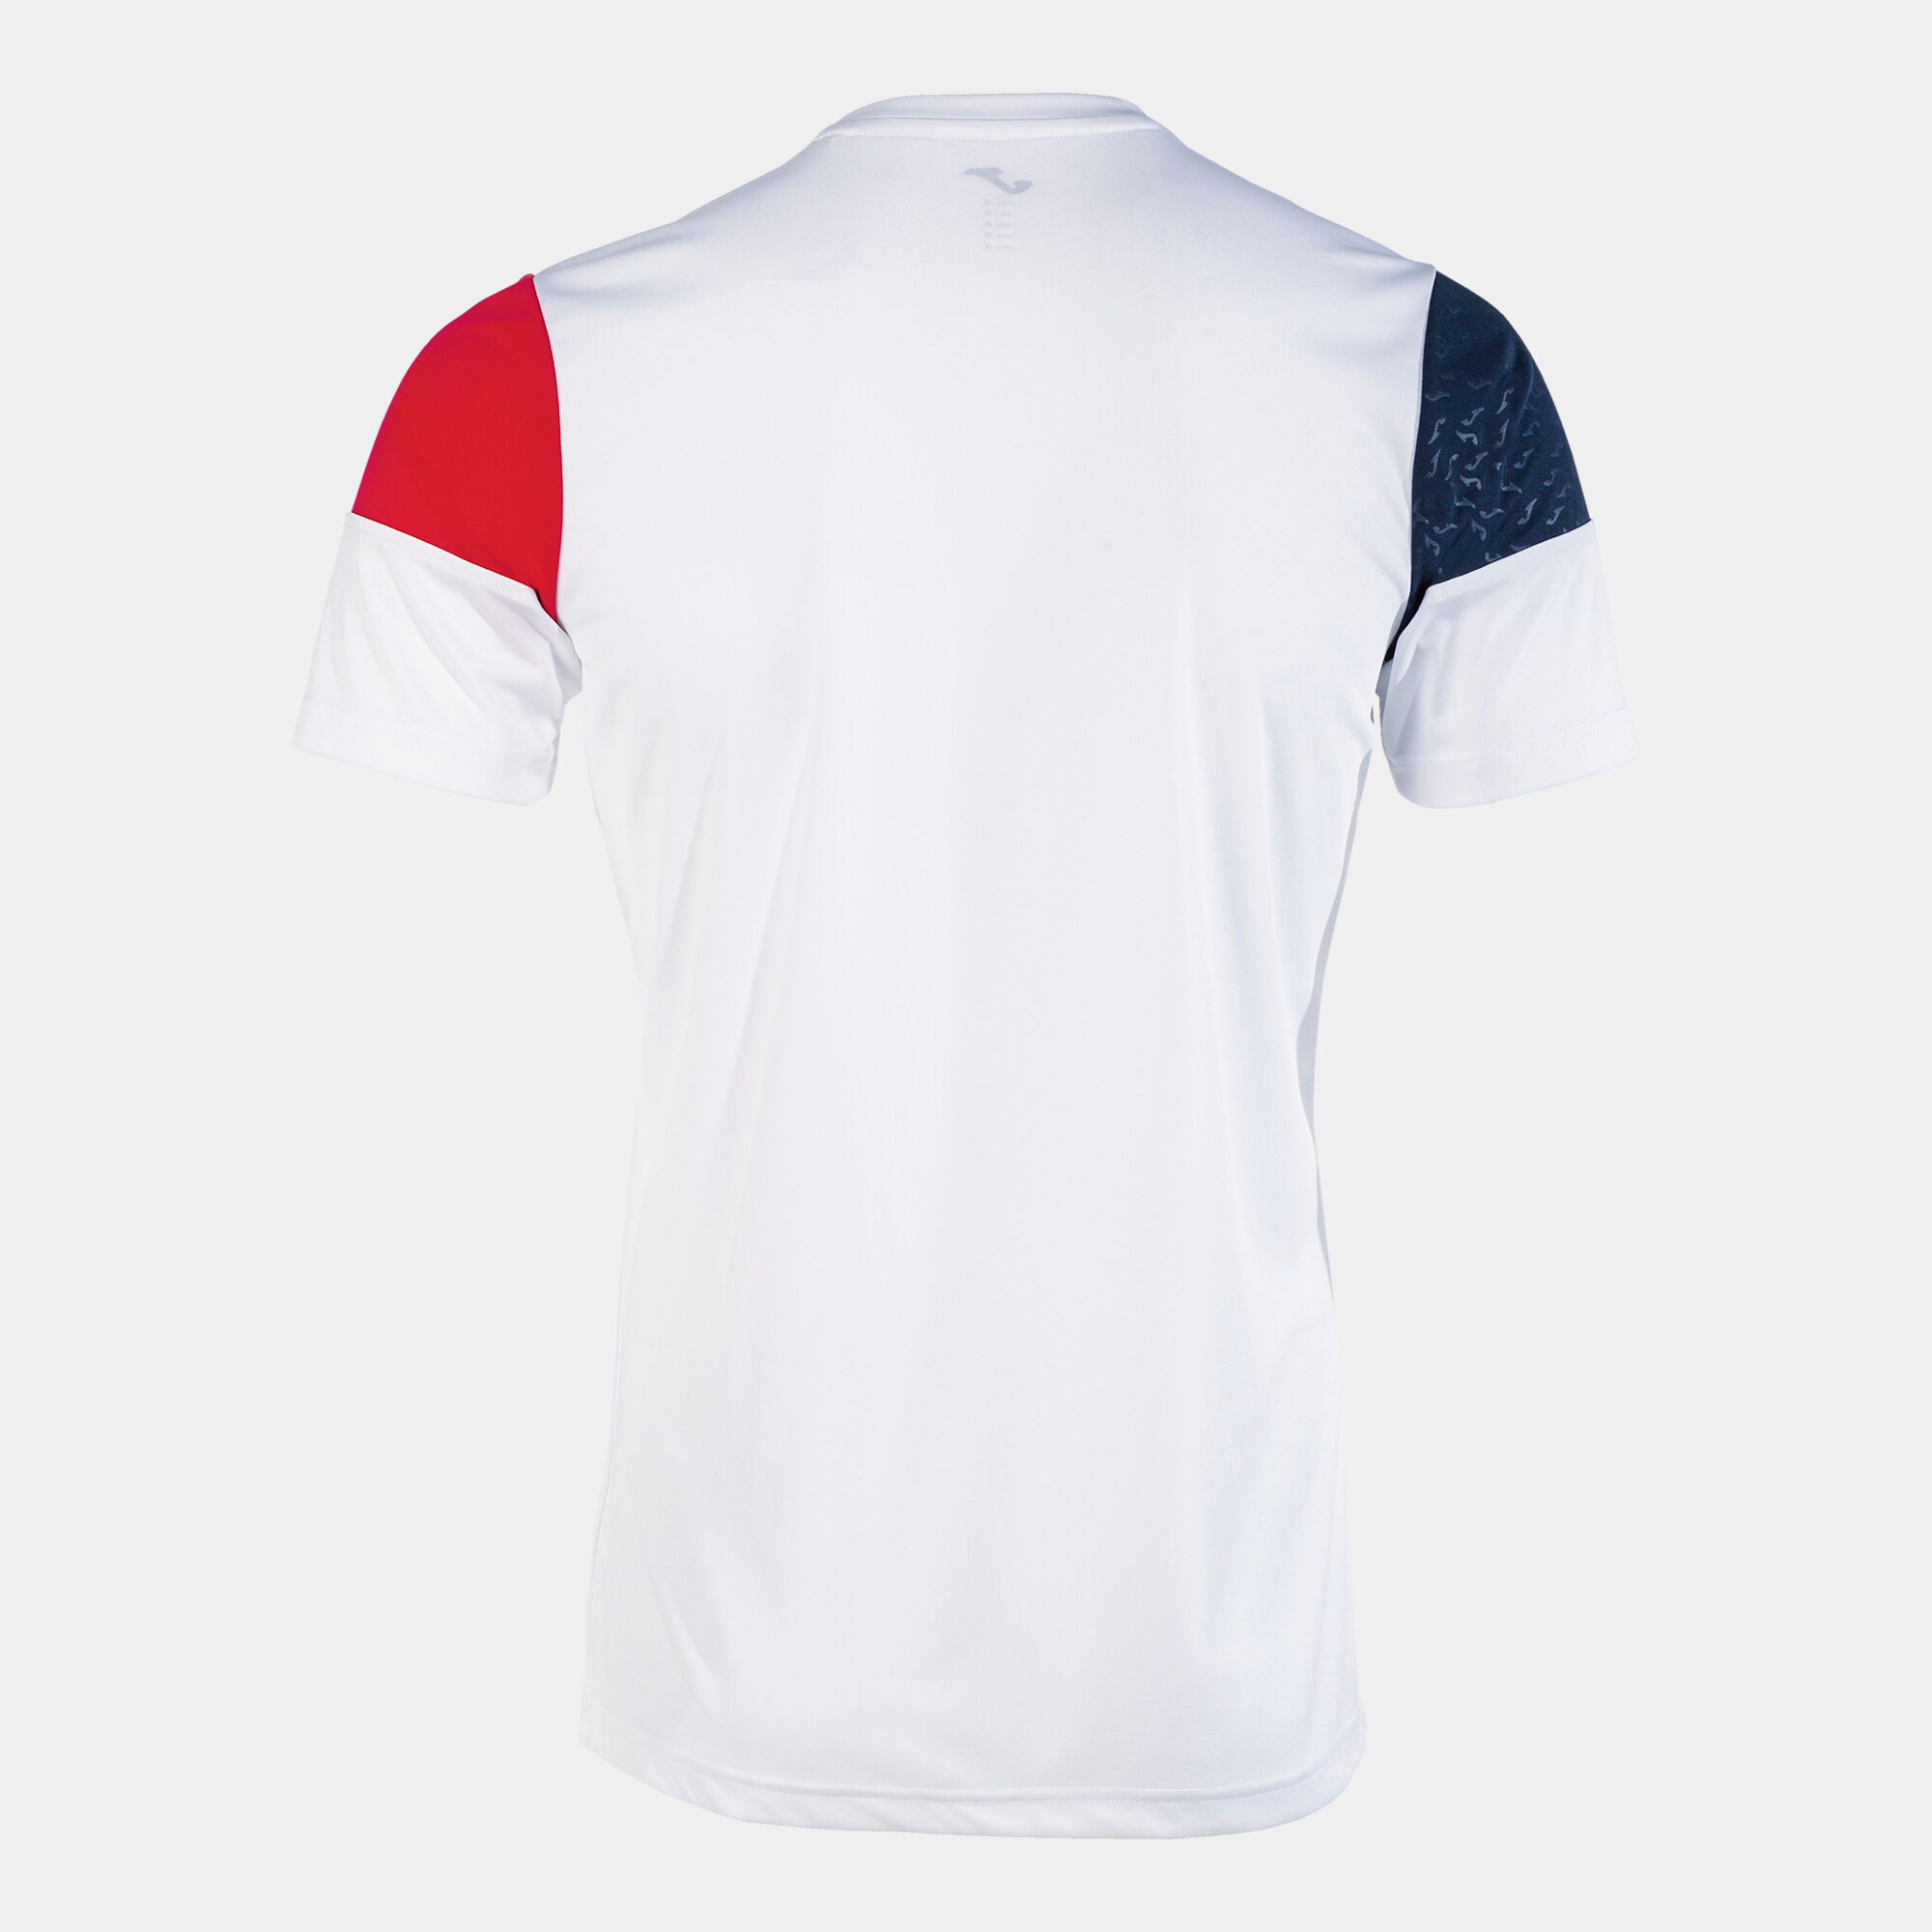 Camiseta manga corta hombre Crew V blanco rojo